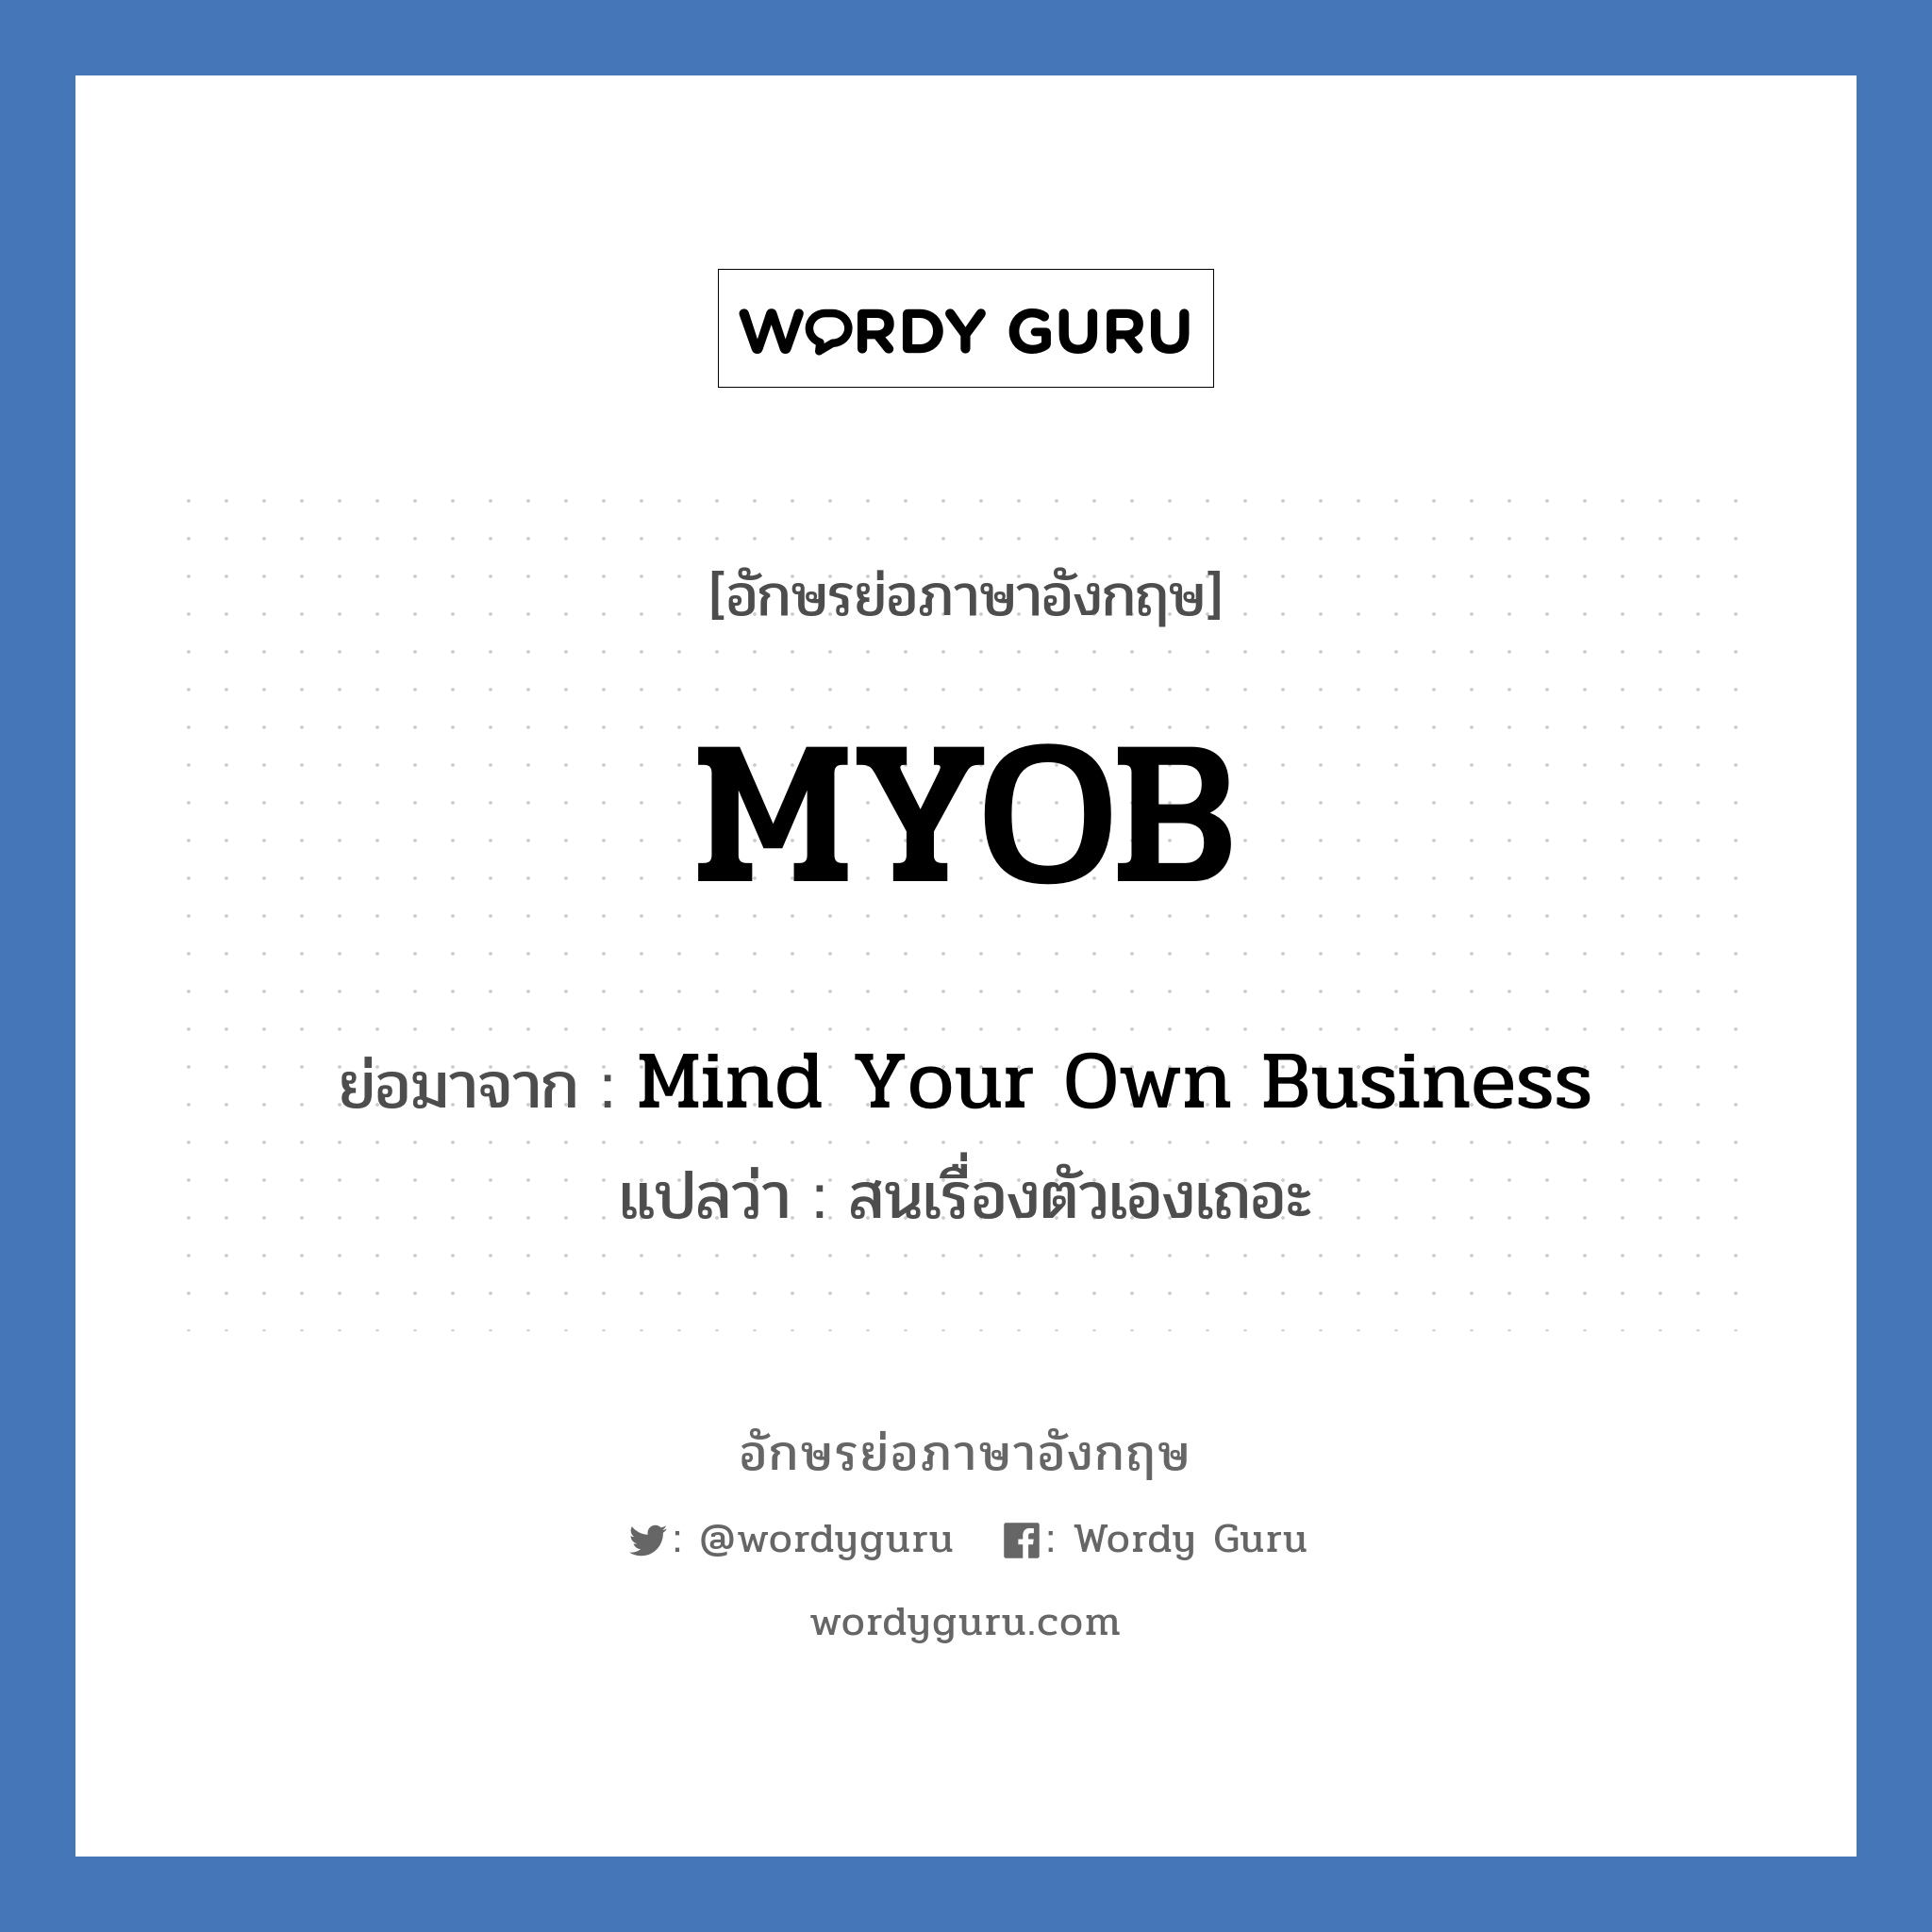 MYOB ย่อมาจาก? แปลว่า?, อักษรย่อภาษาอังกฤษ MYOB ย่อมาจาก Mind Your Own Business แปลว่า สนเรื่องตัวเองเถอะ